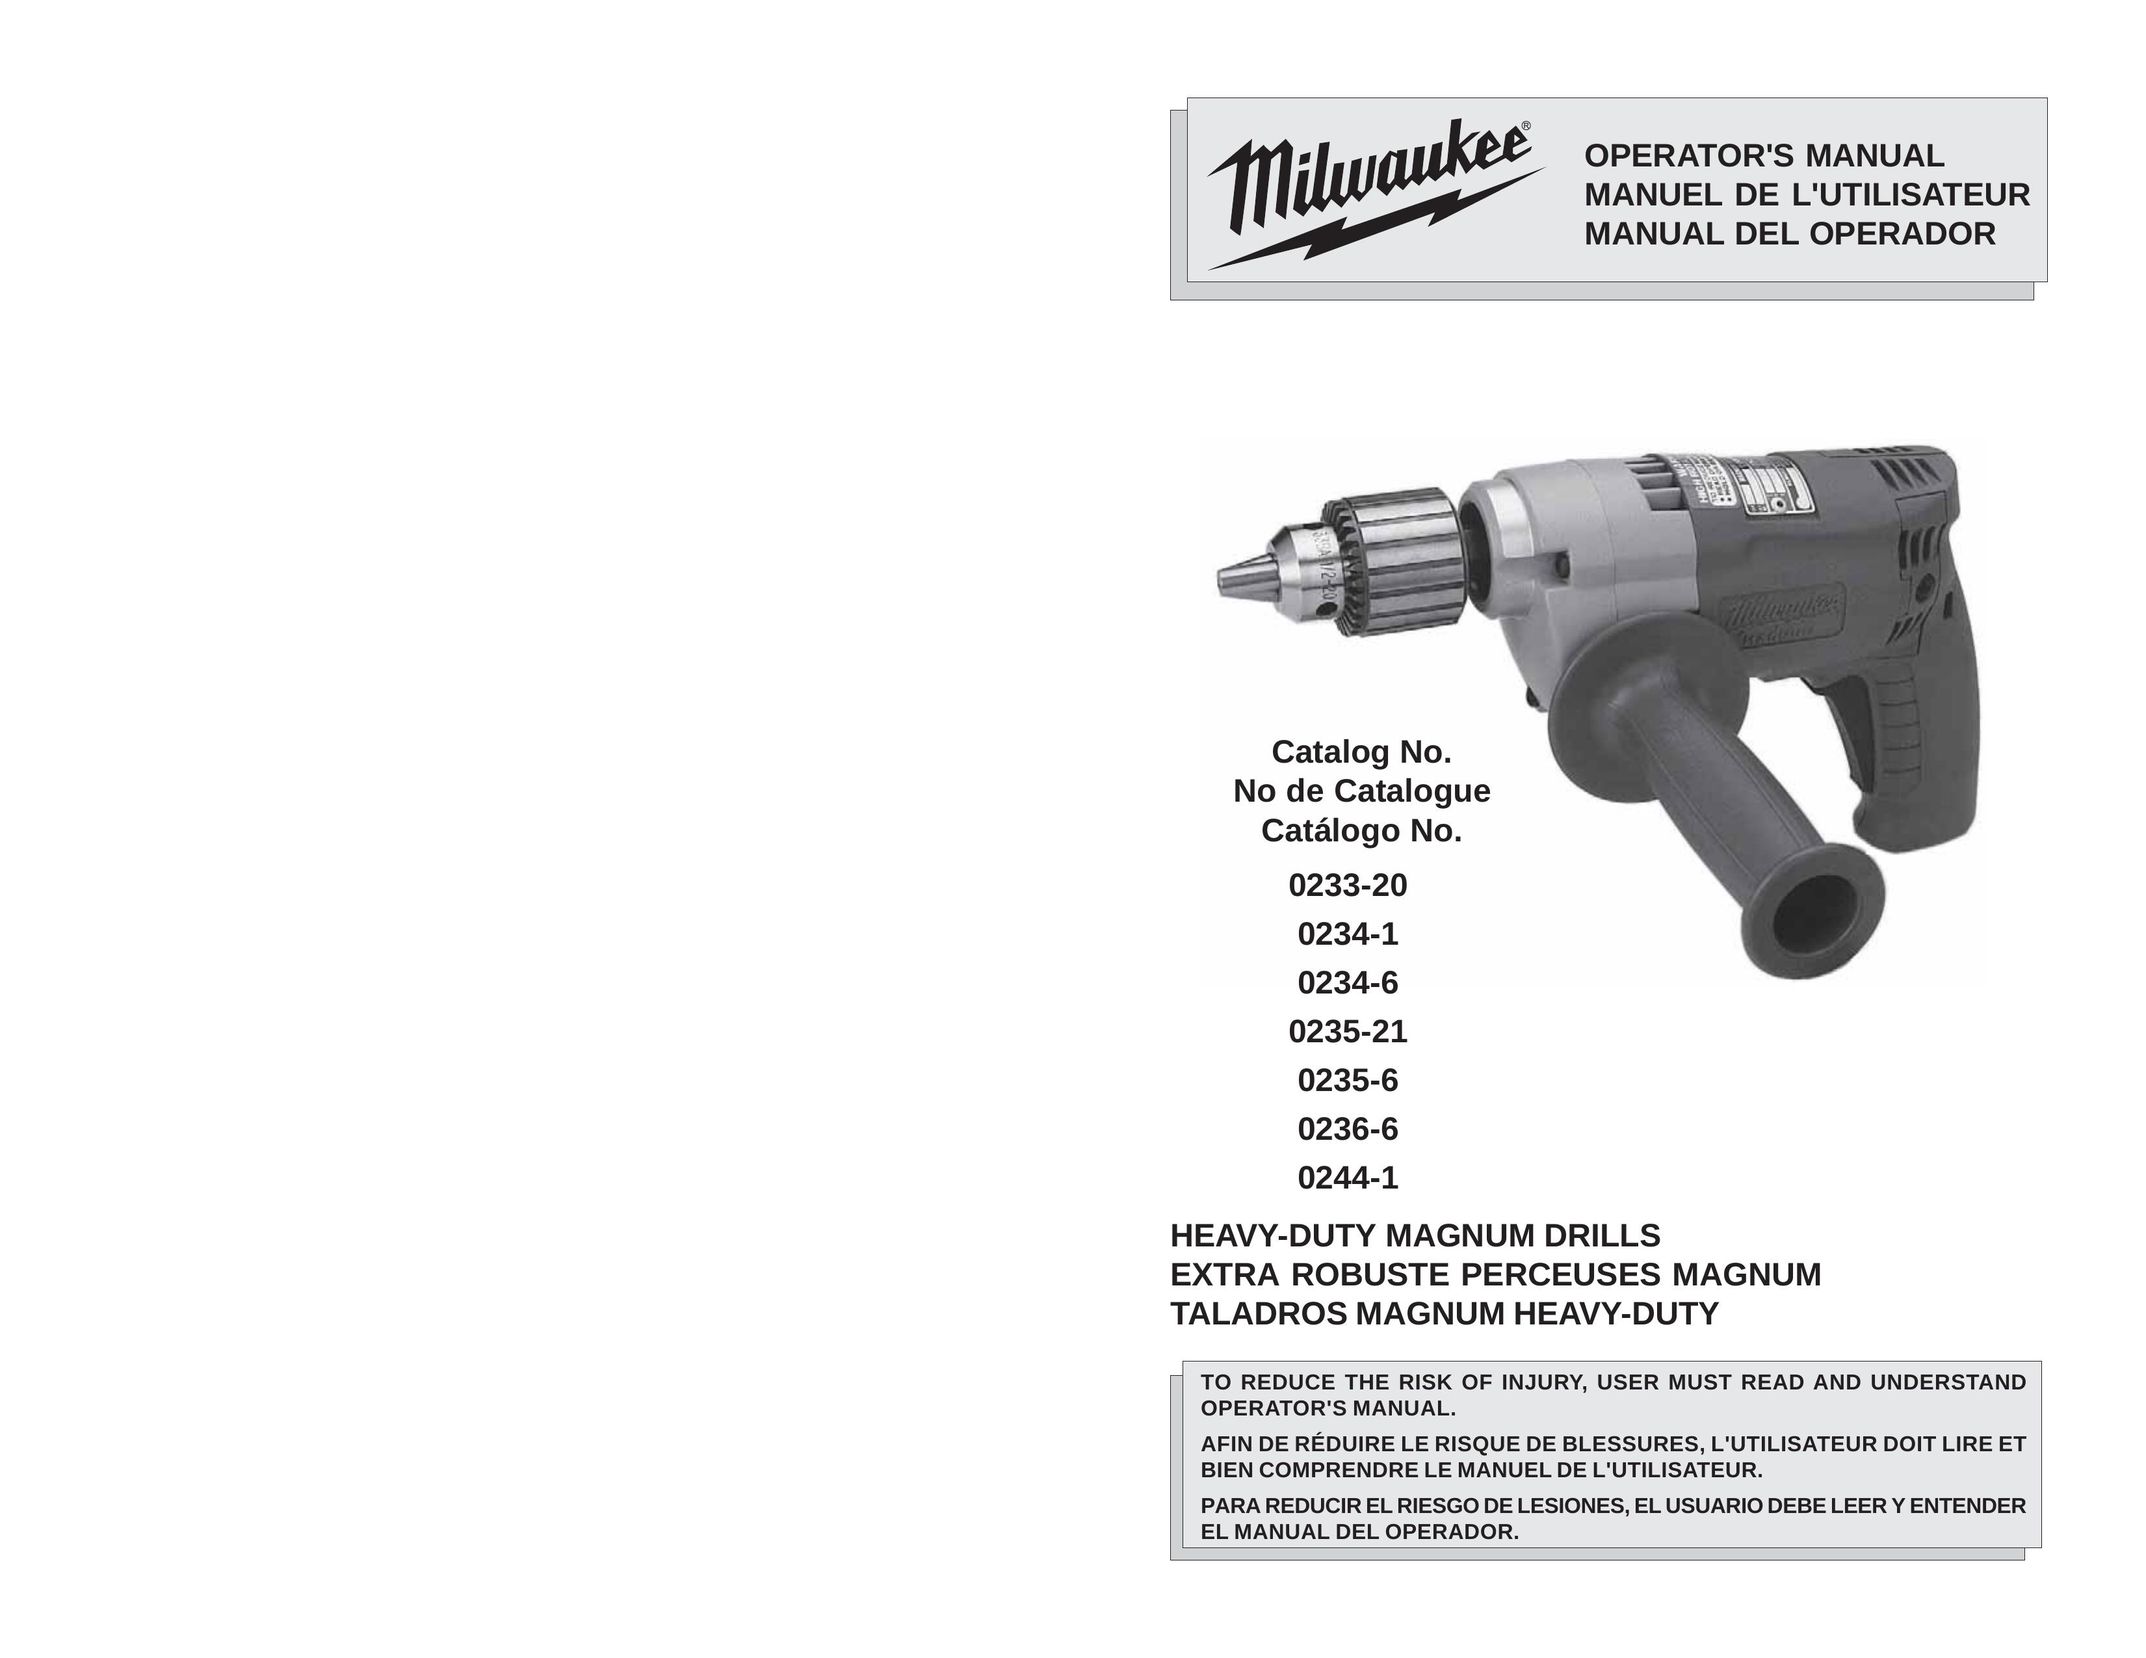 Milwaukee 0244-1 Drill User Manual